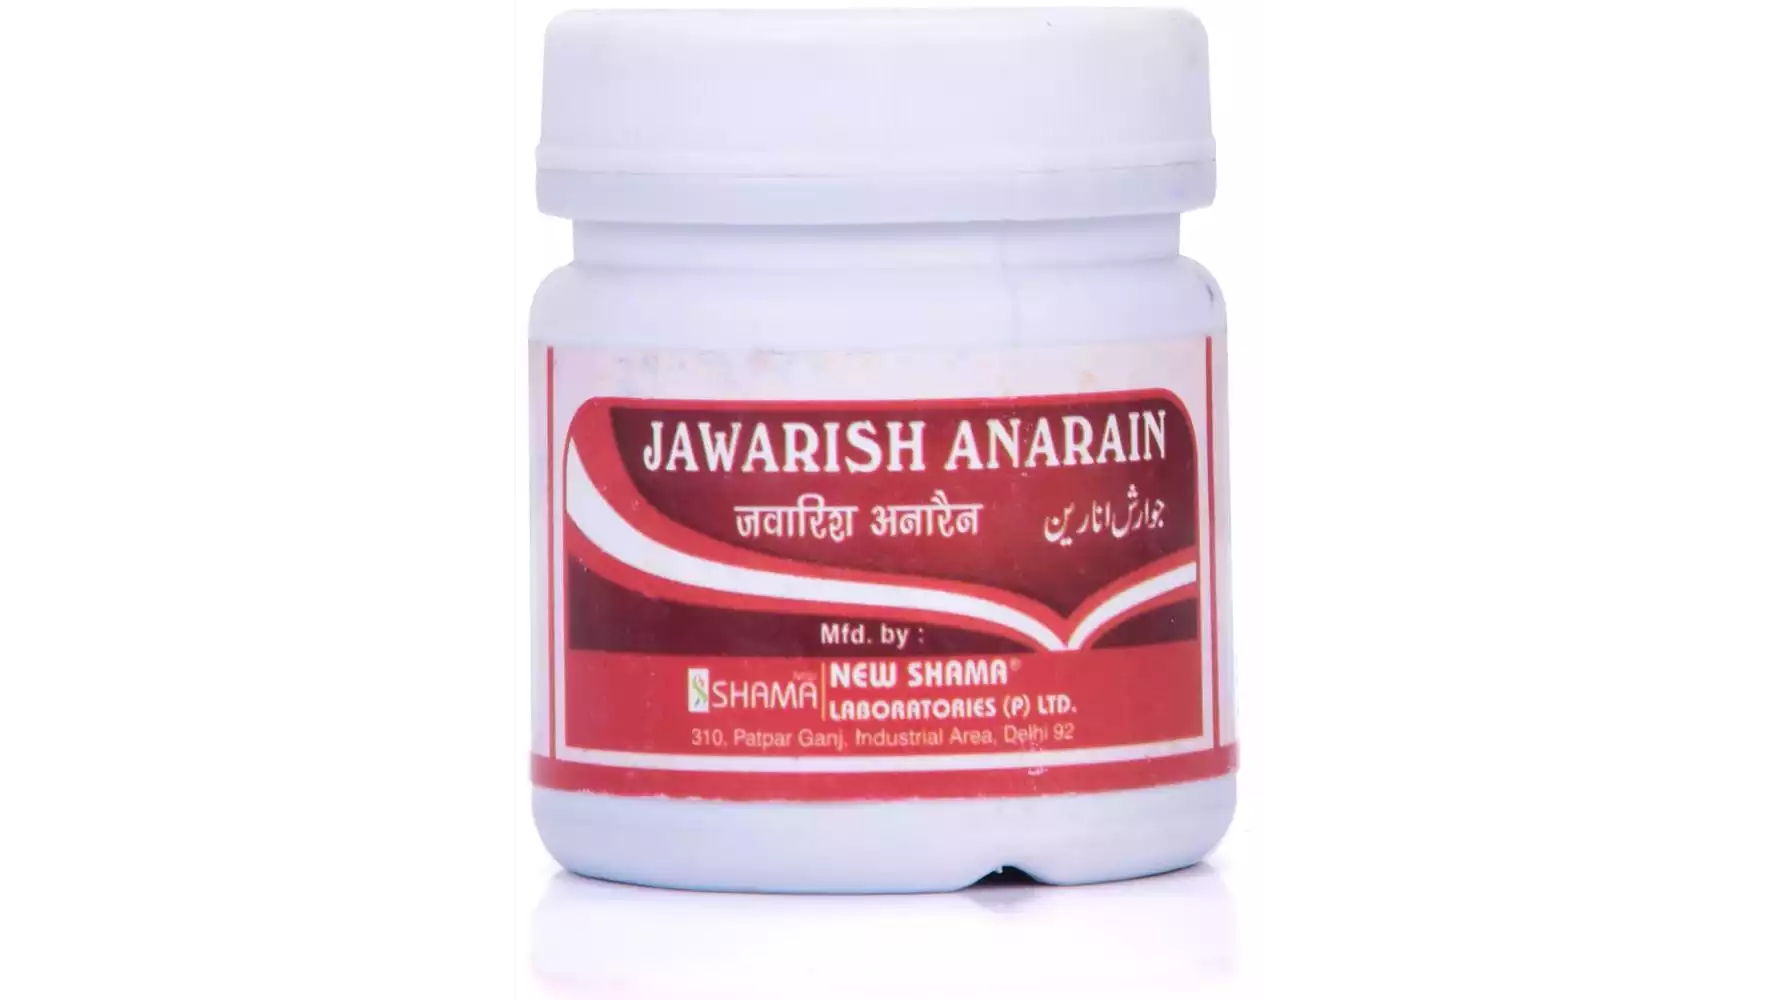 New Shama Jawarish Anarain (125g)